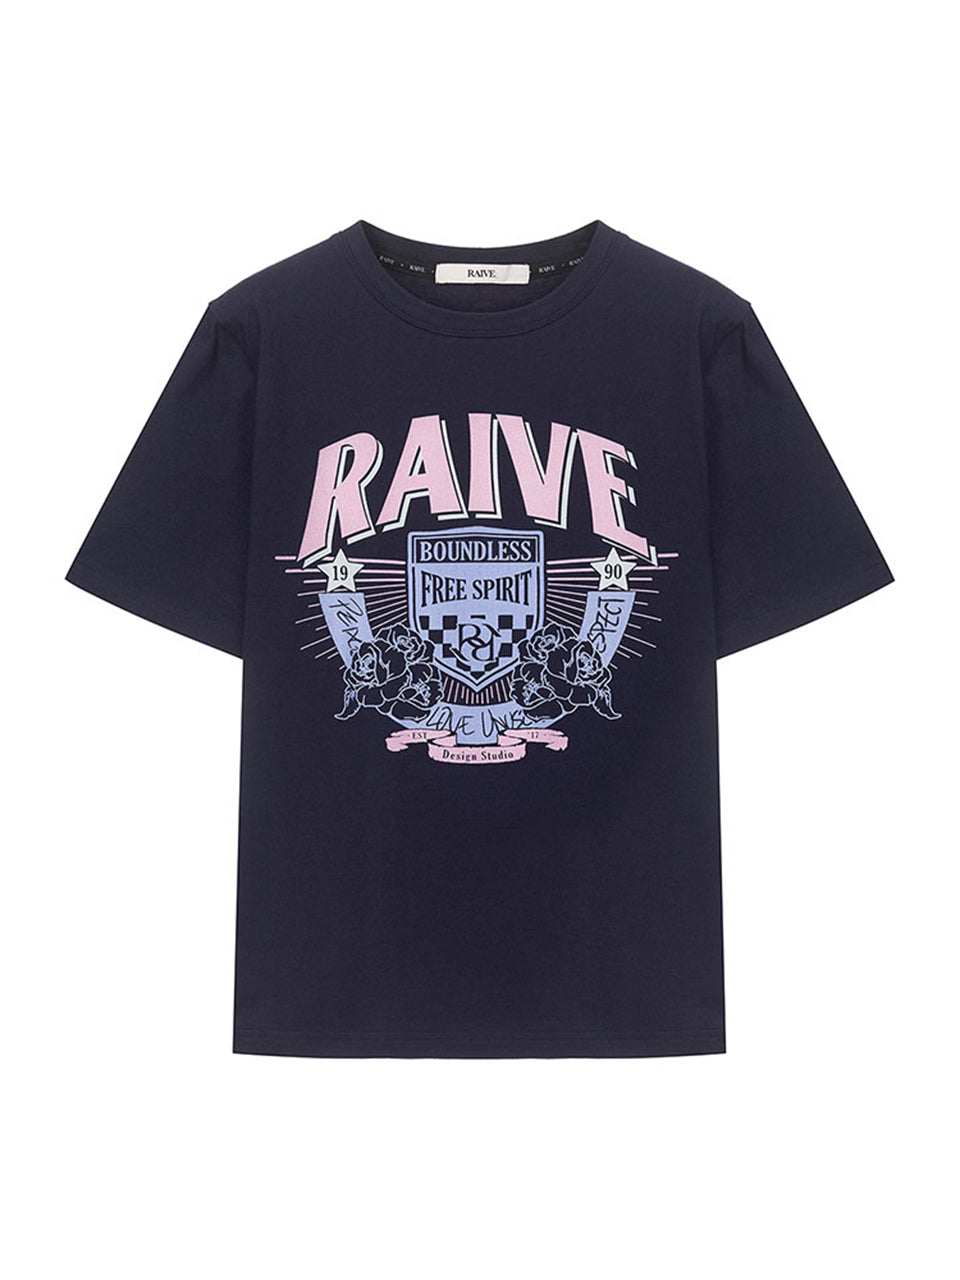 RAIVE Graphic T-shirt in Navy